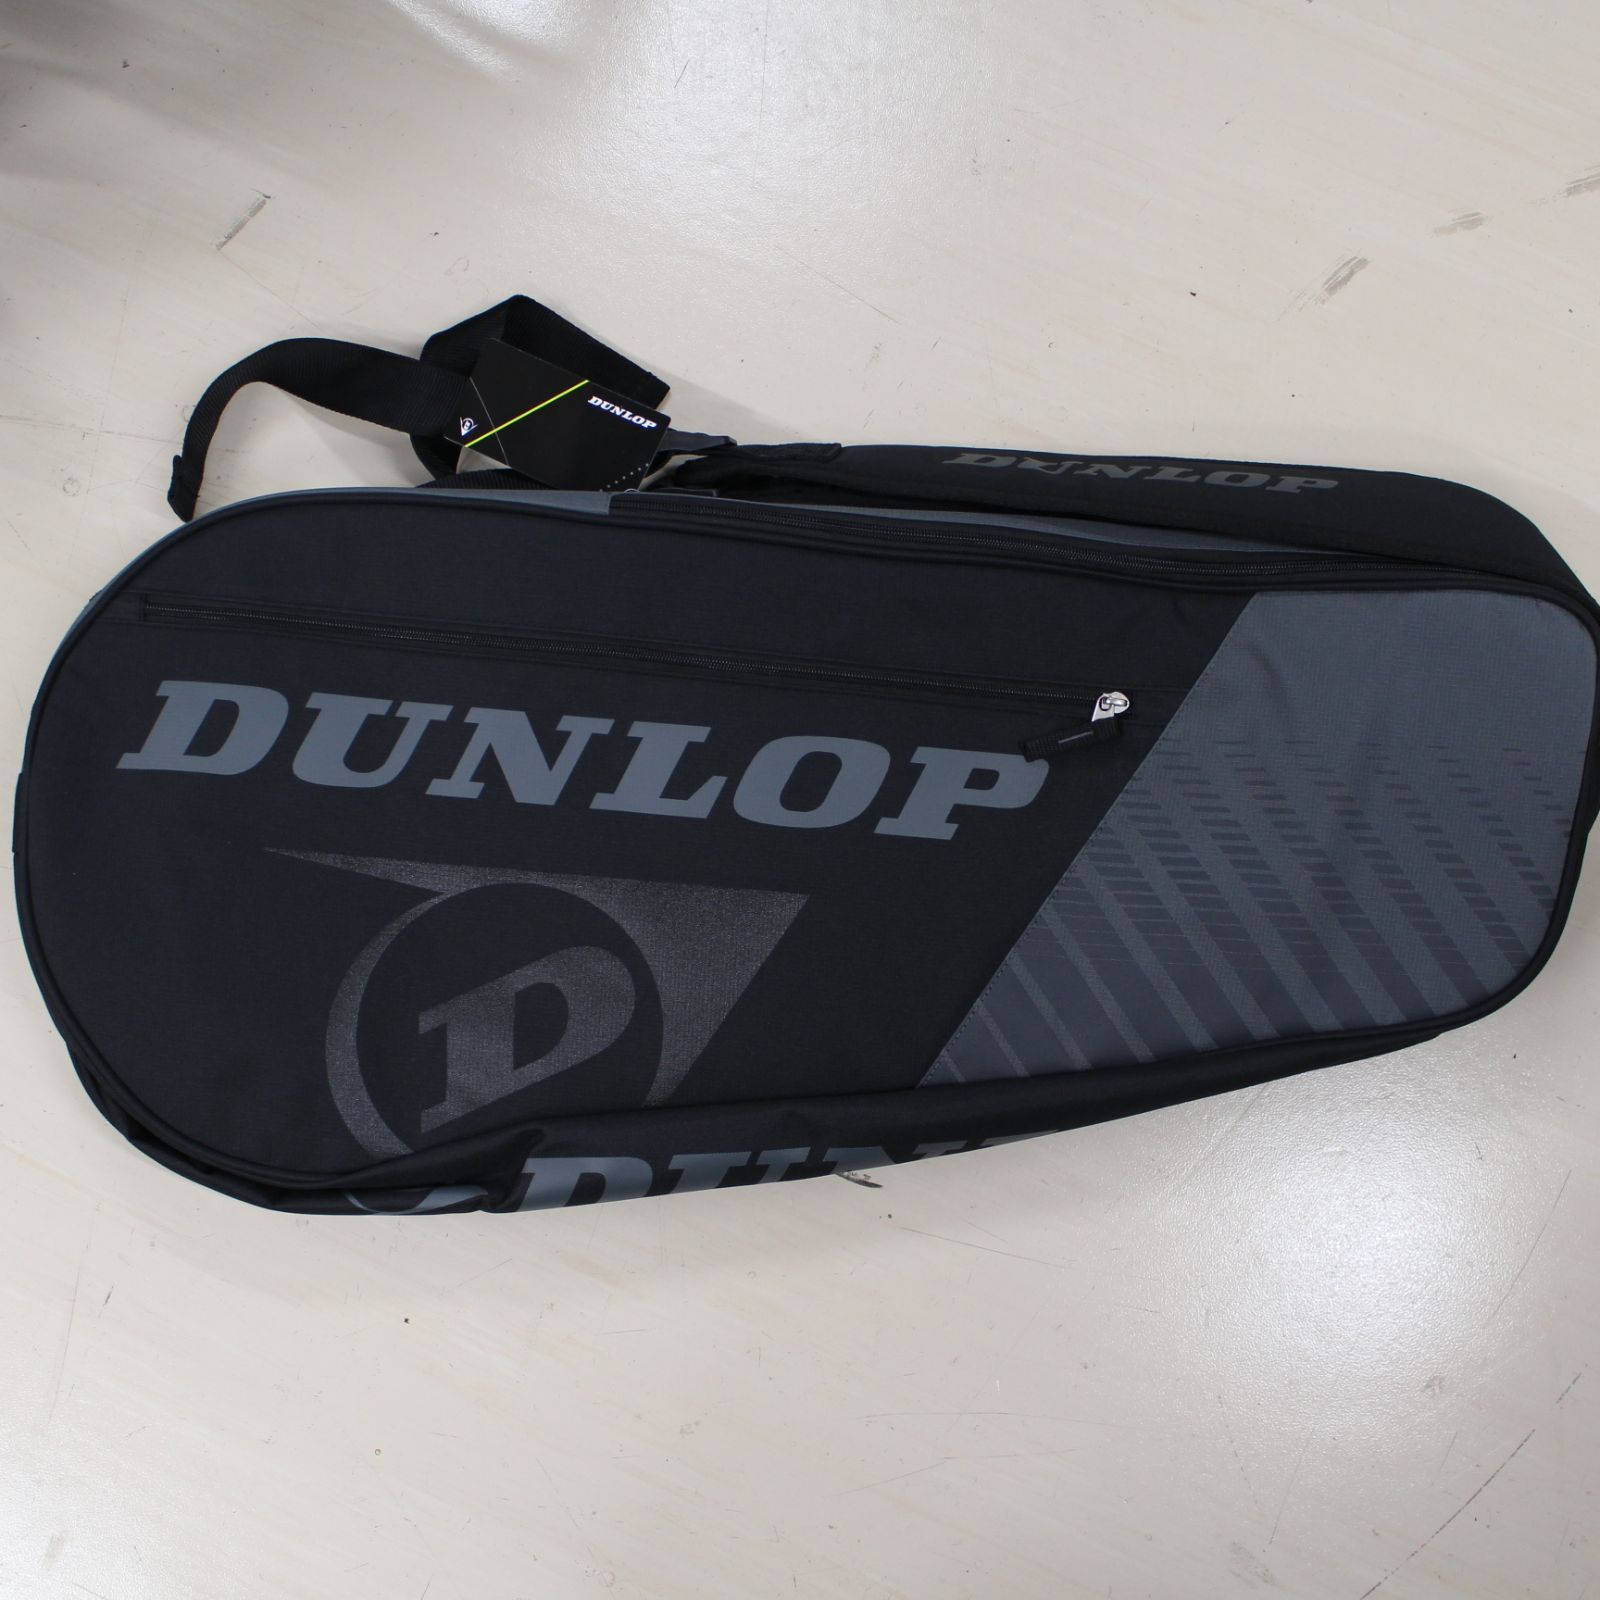 Dunlop未使用テニス ラケットバッグ